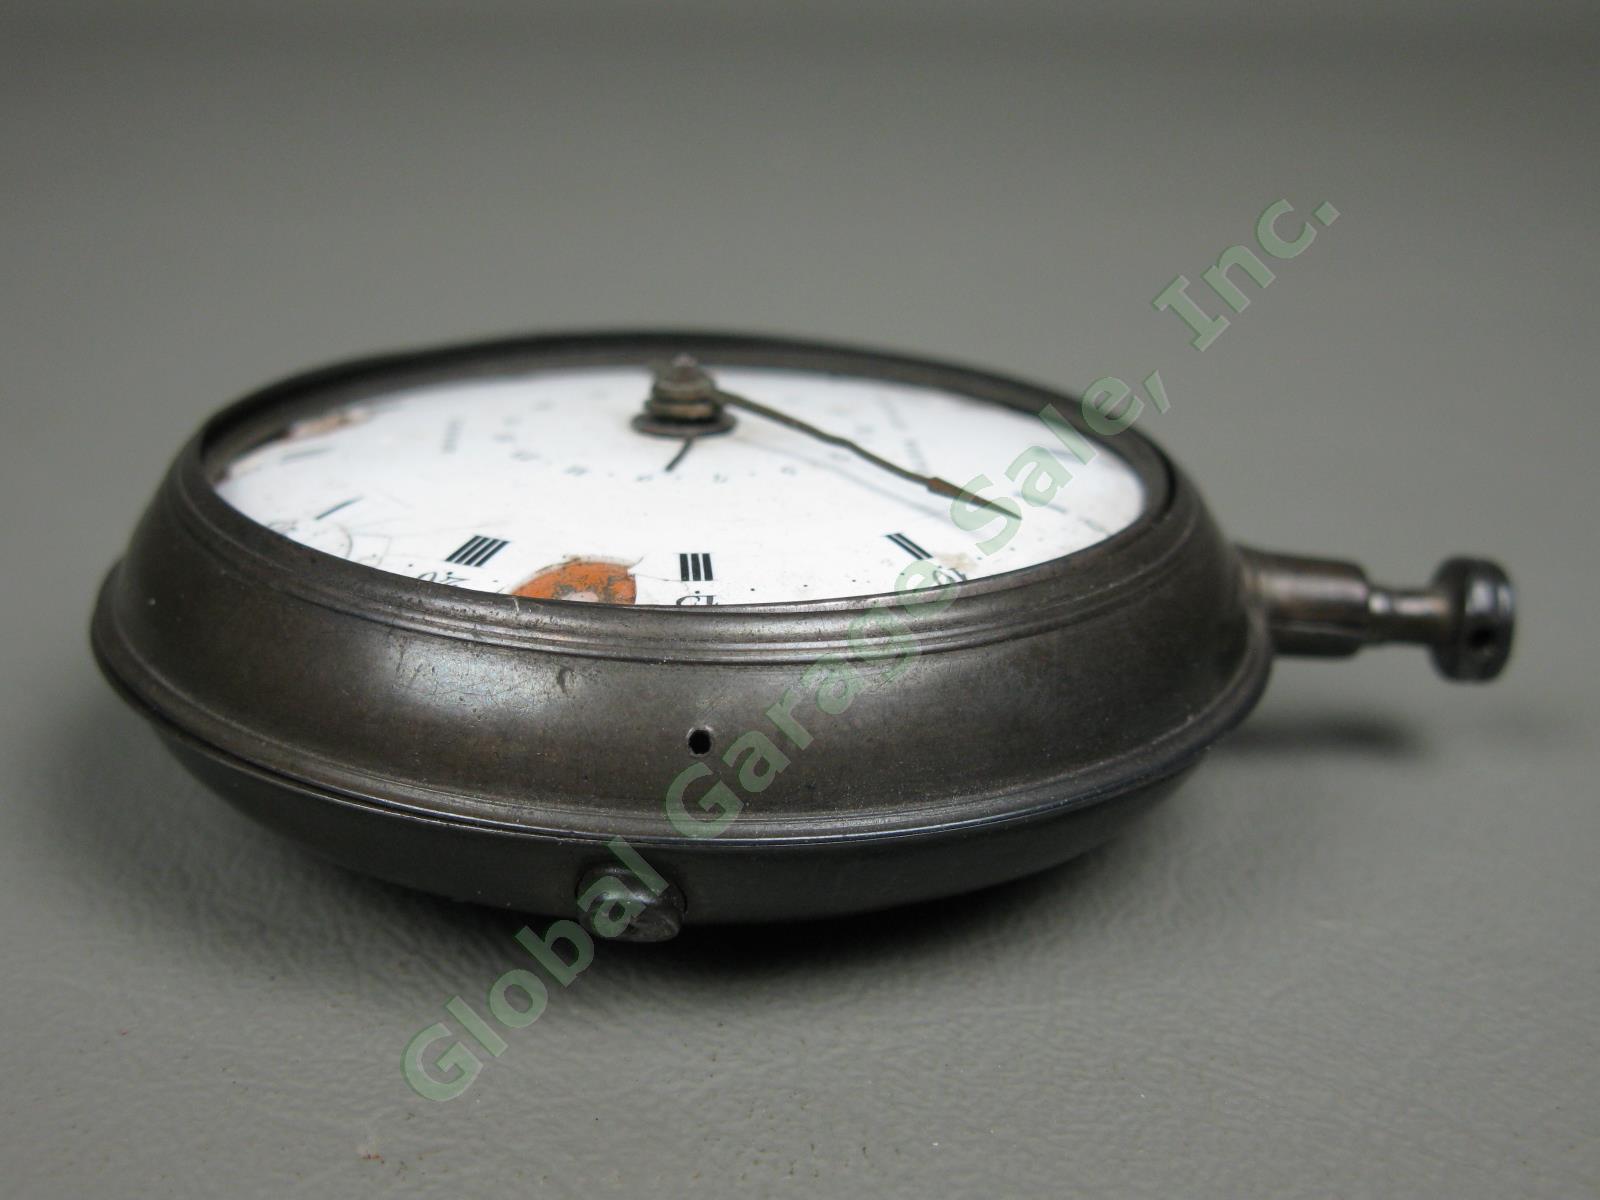 Antique Eardley Norton Calendar Pocket Watch Sterling Silver Case London England 1